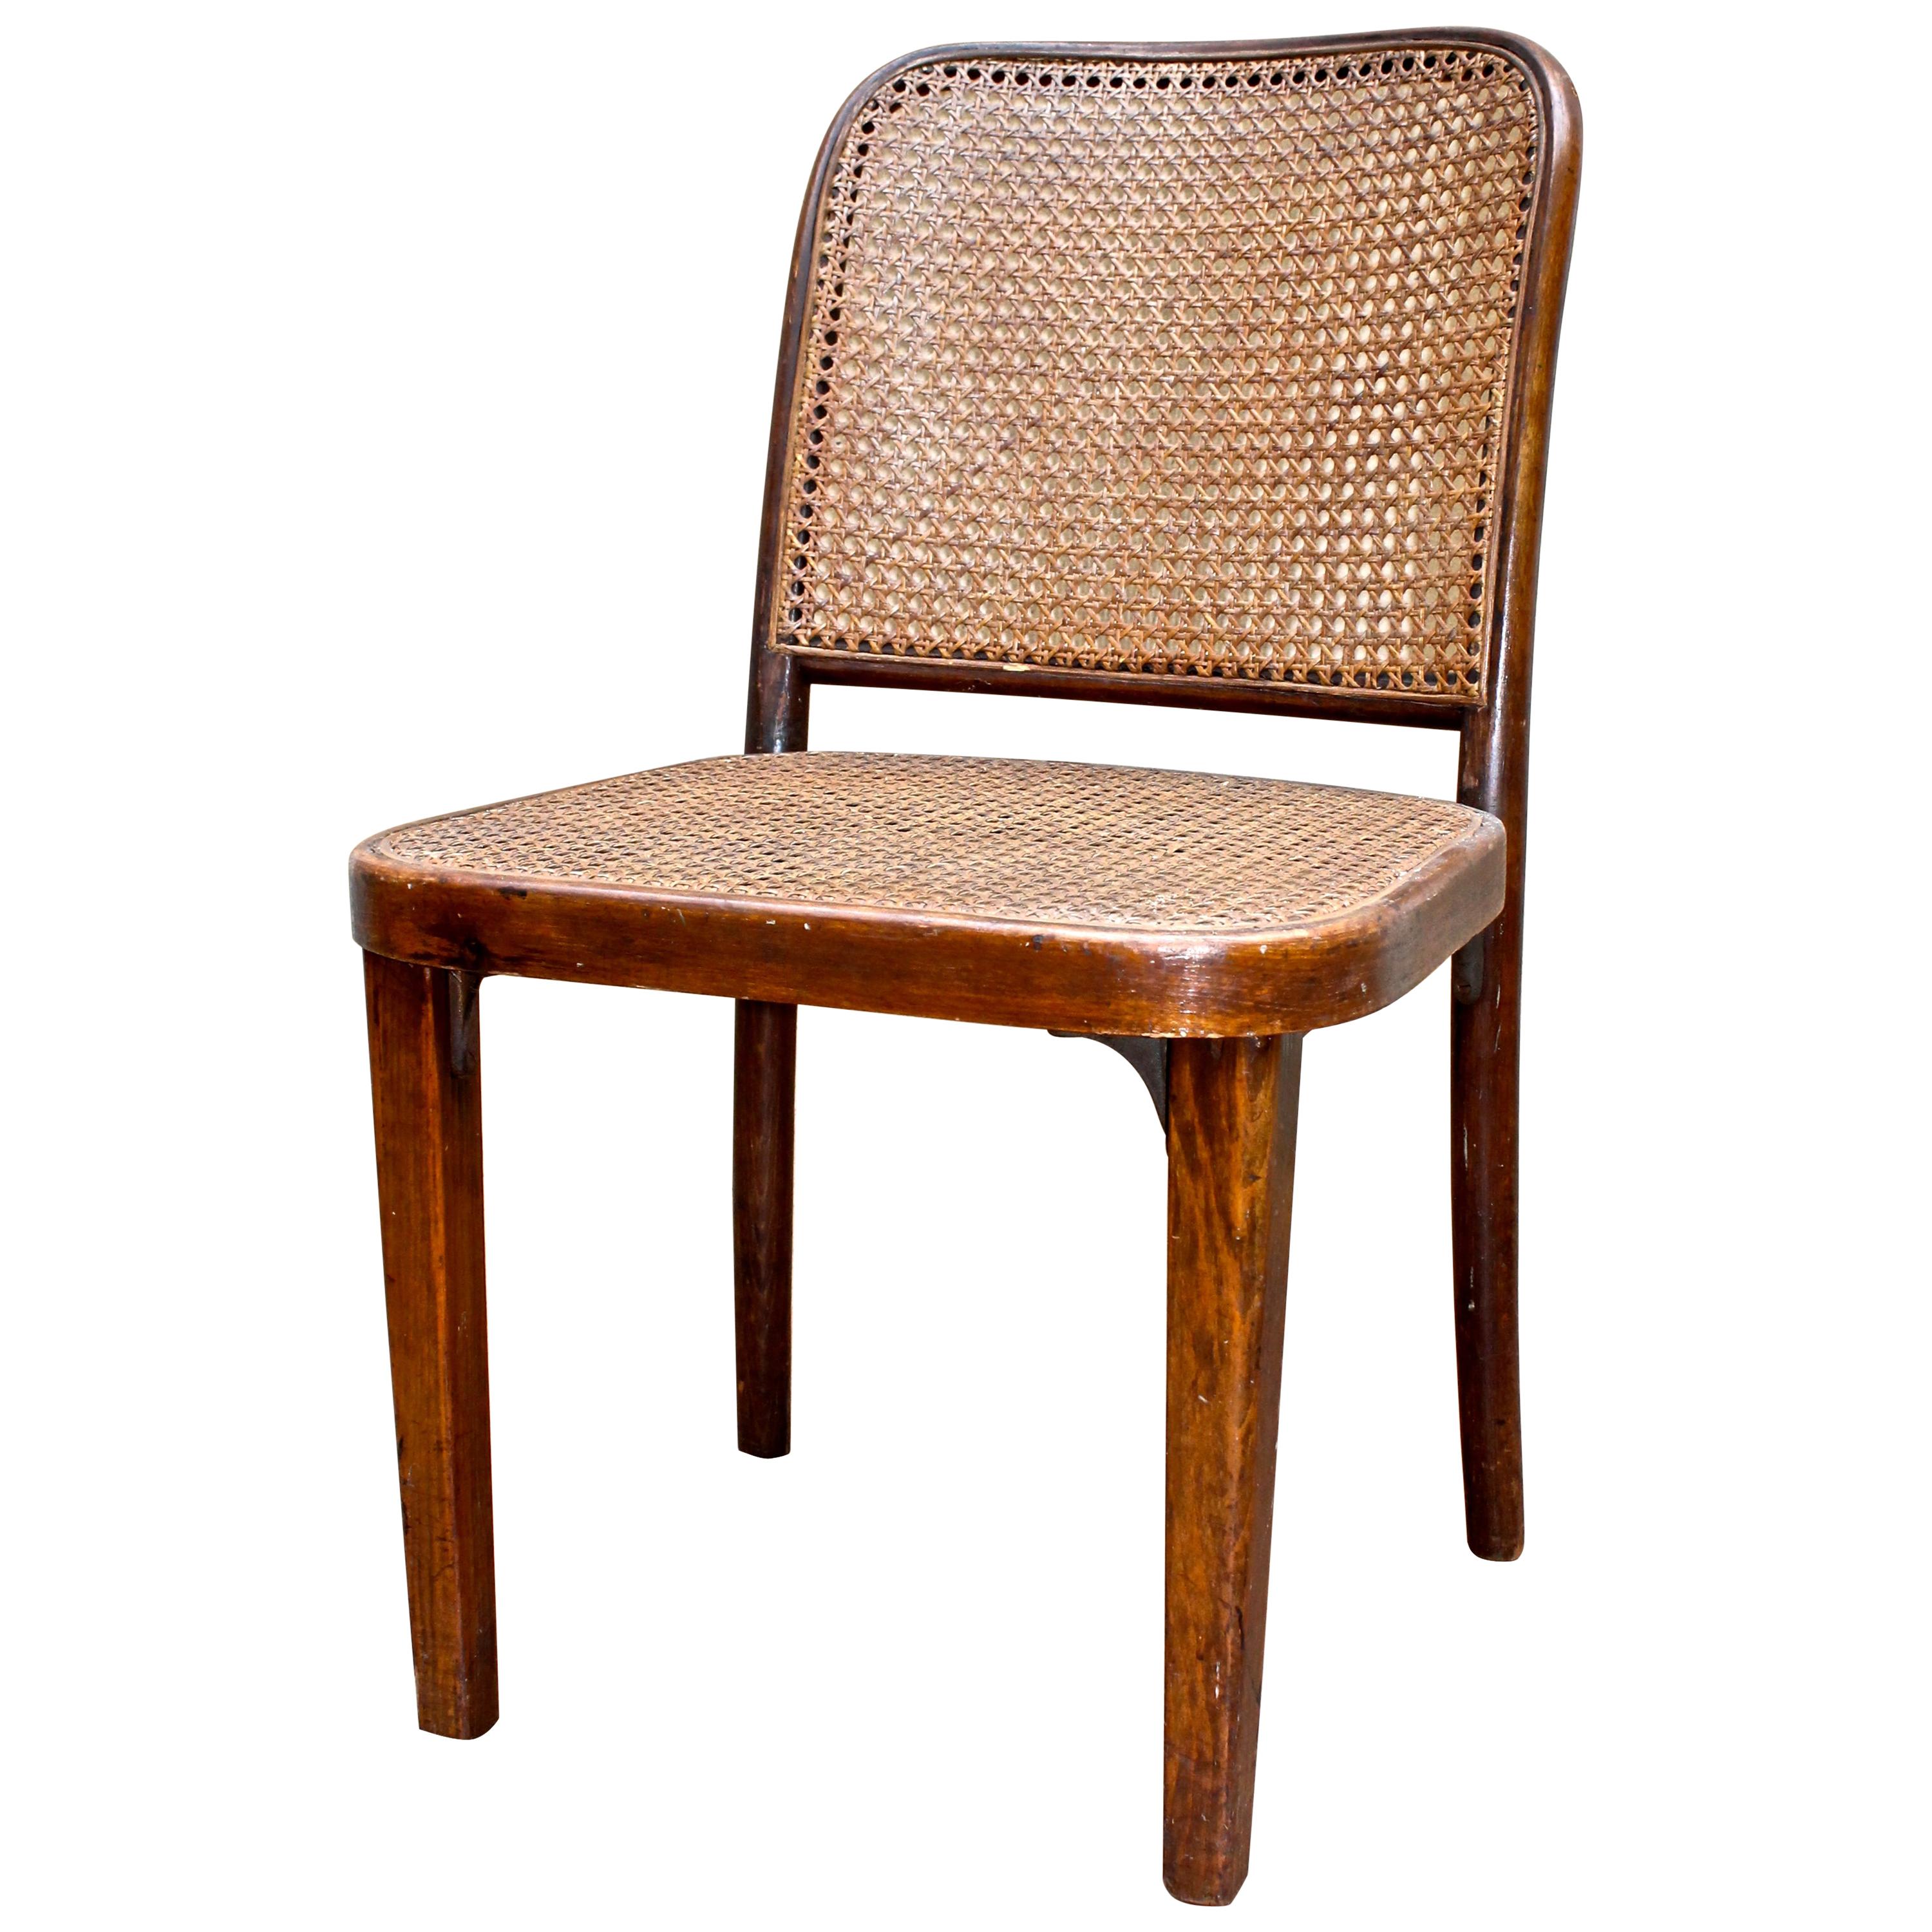 Joseph Frank Classic 'Prague' Bentwood Chair